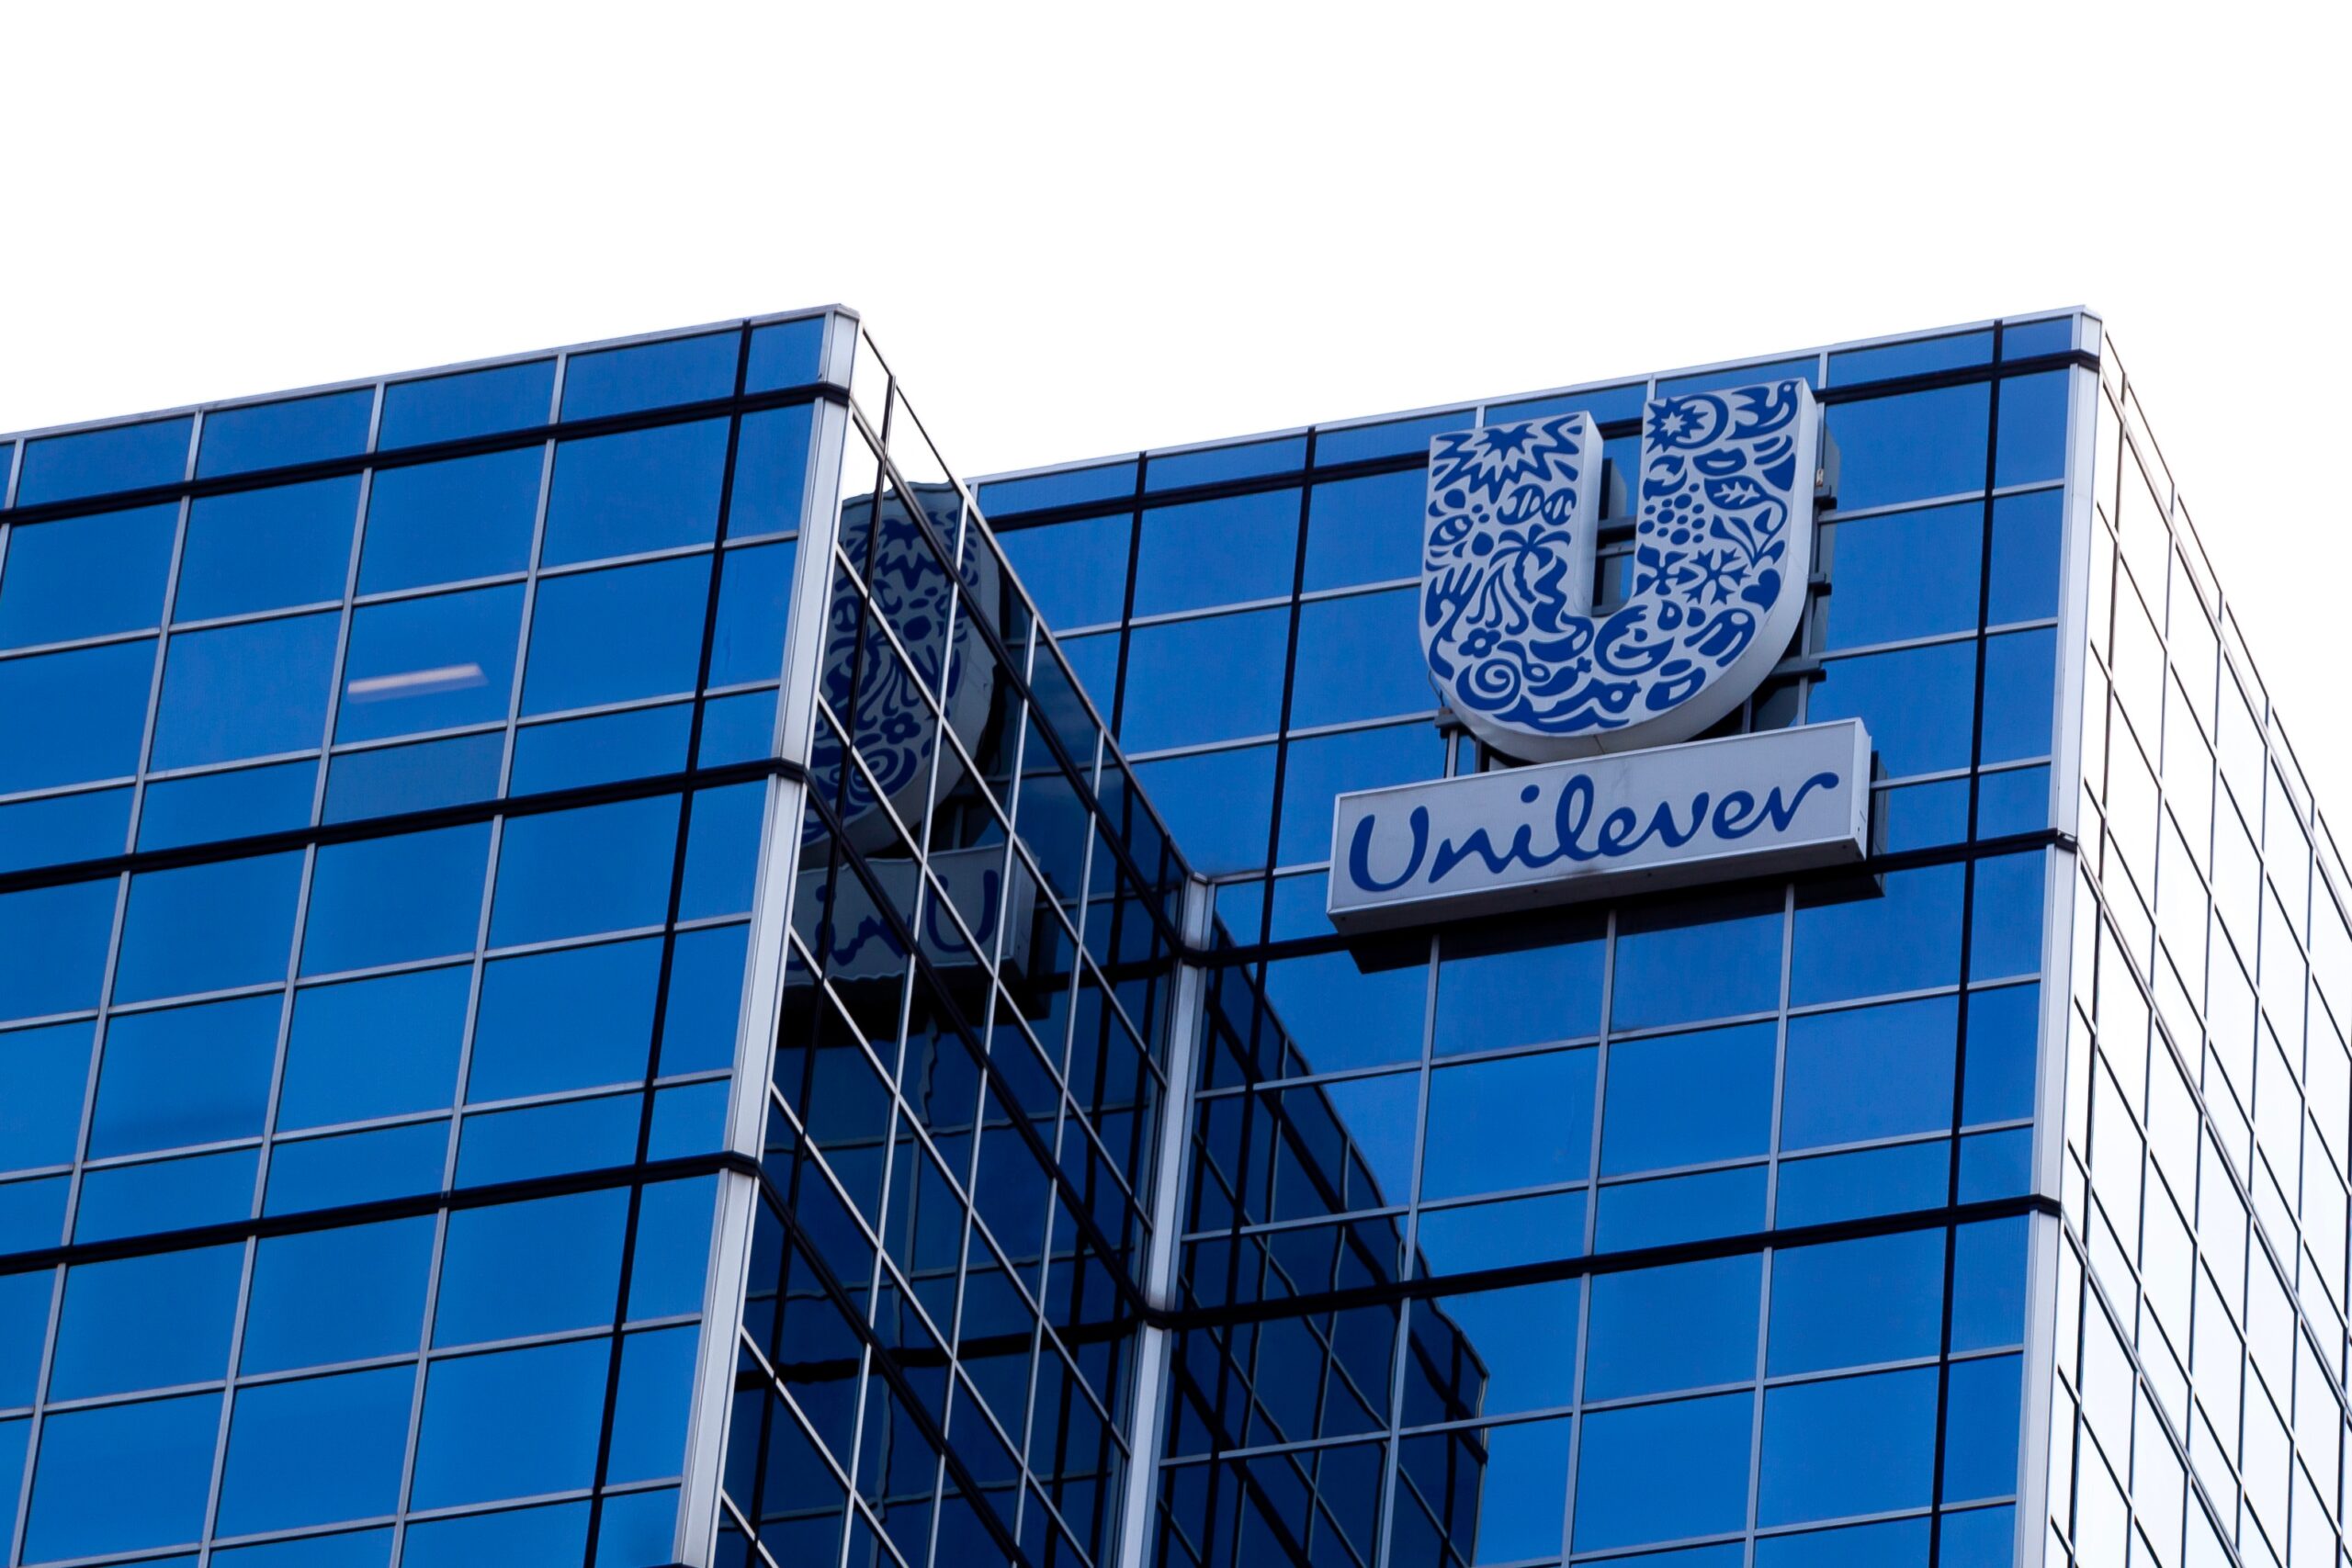 Unilever won’t up GSK assets bid, stands by strategic plan